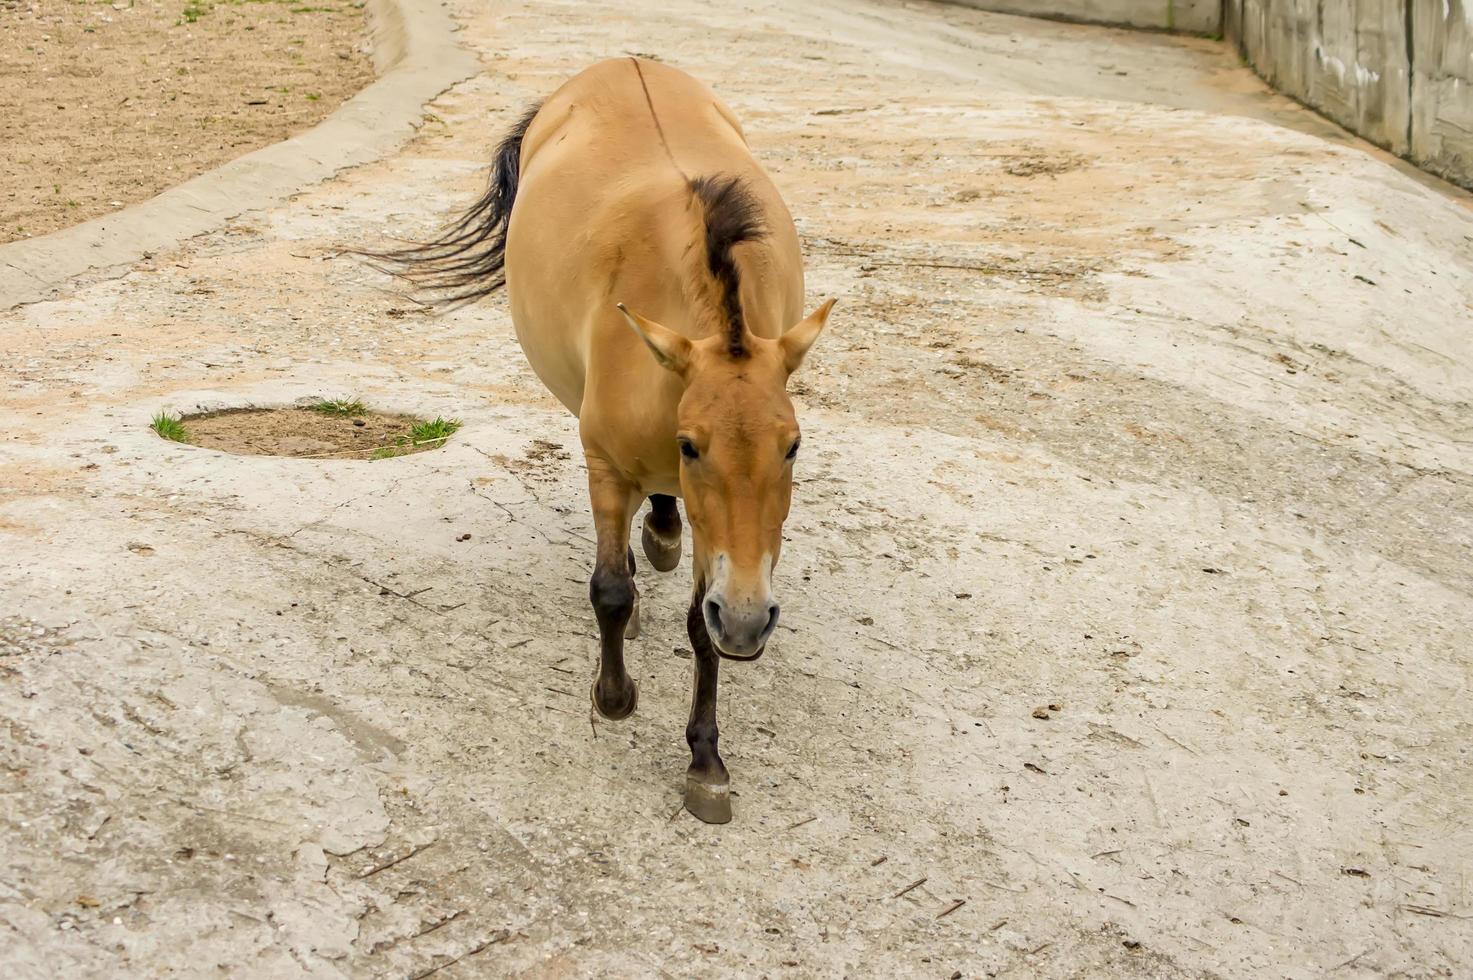 cheval de przewalski au zoo. cheval asiatique sauvage equus ferus przewalskii photo